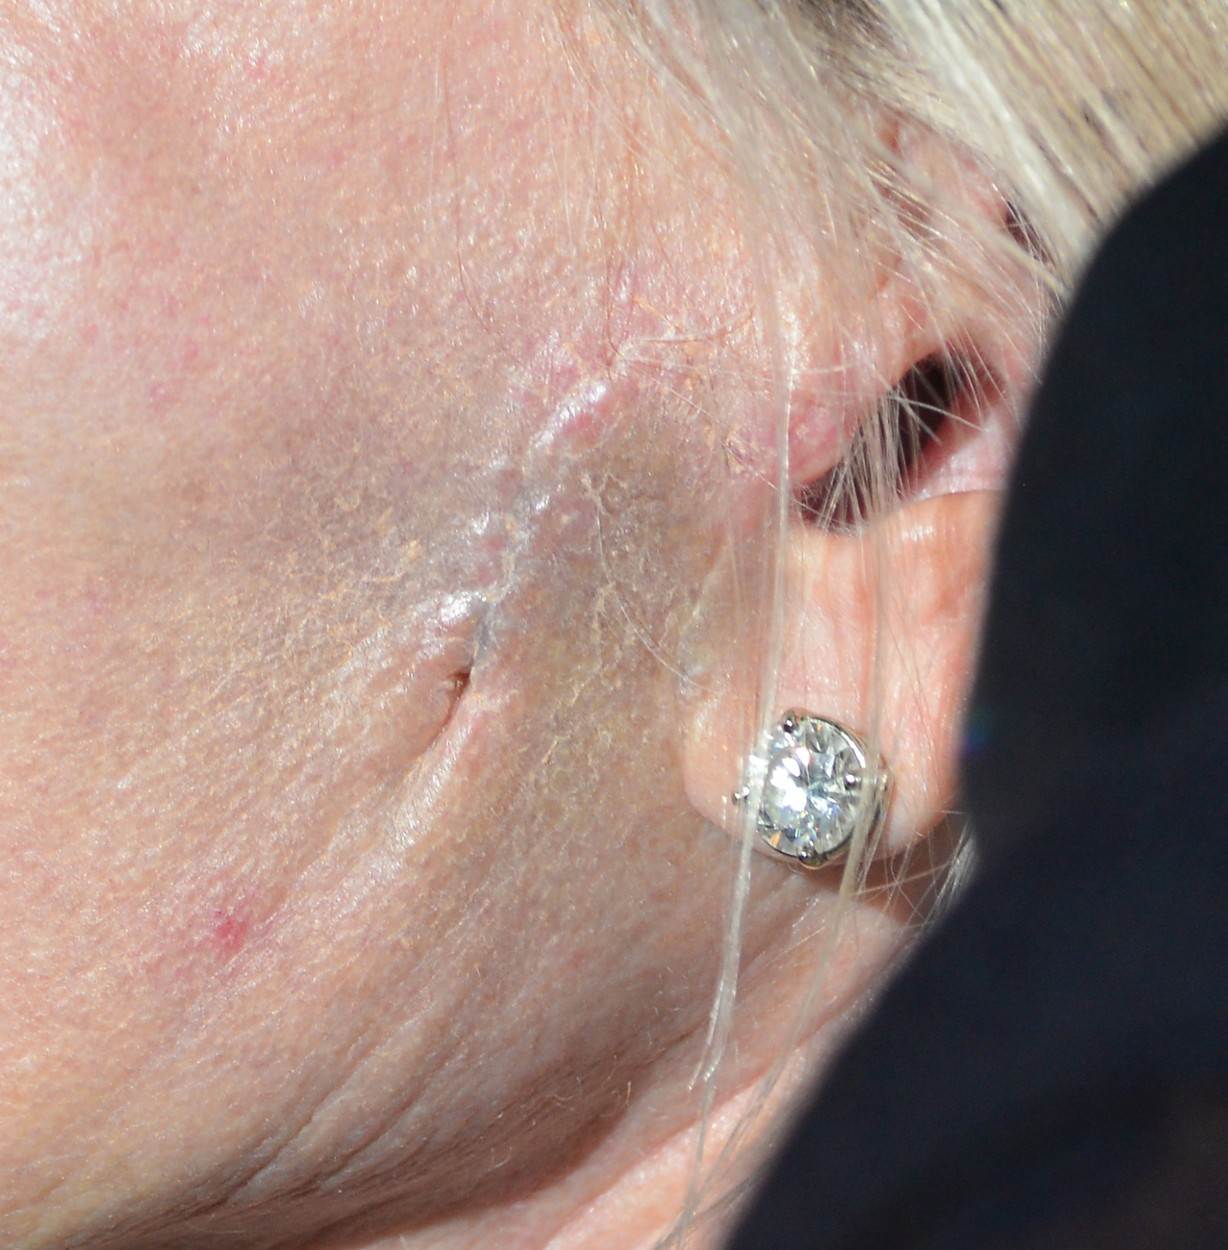  Melani Grifit ima ožiljak kraj uha. 